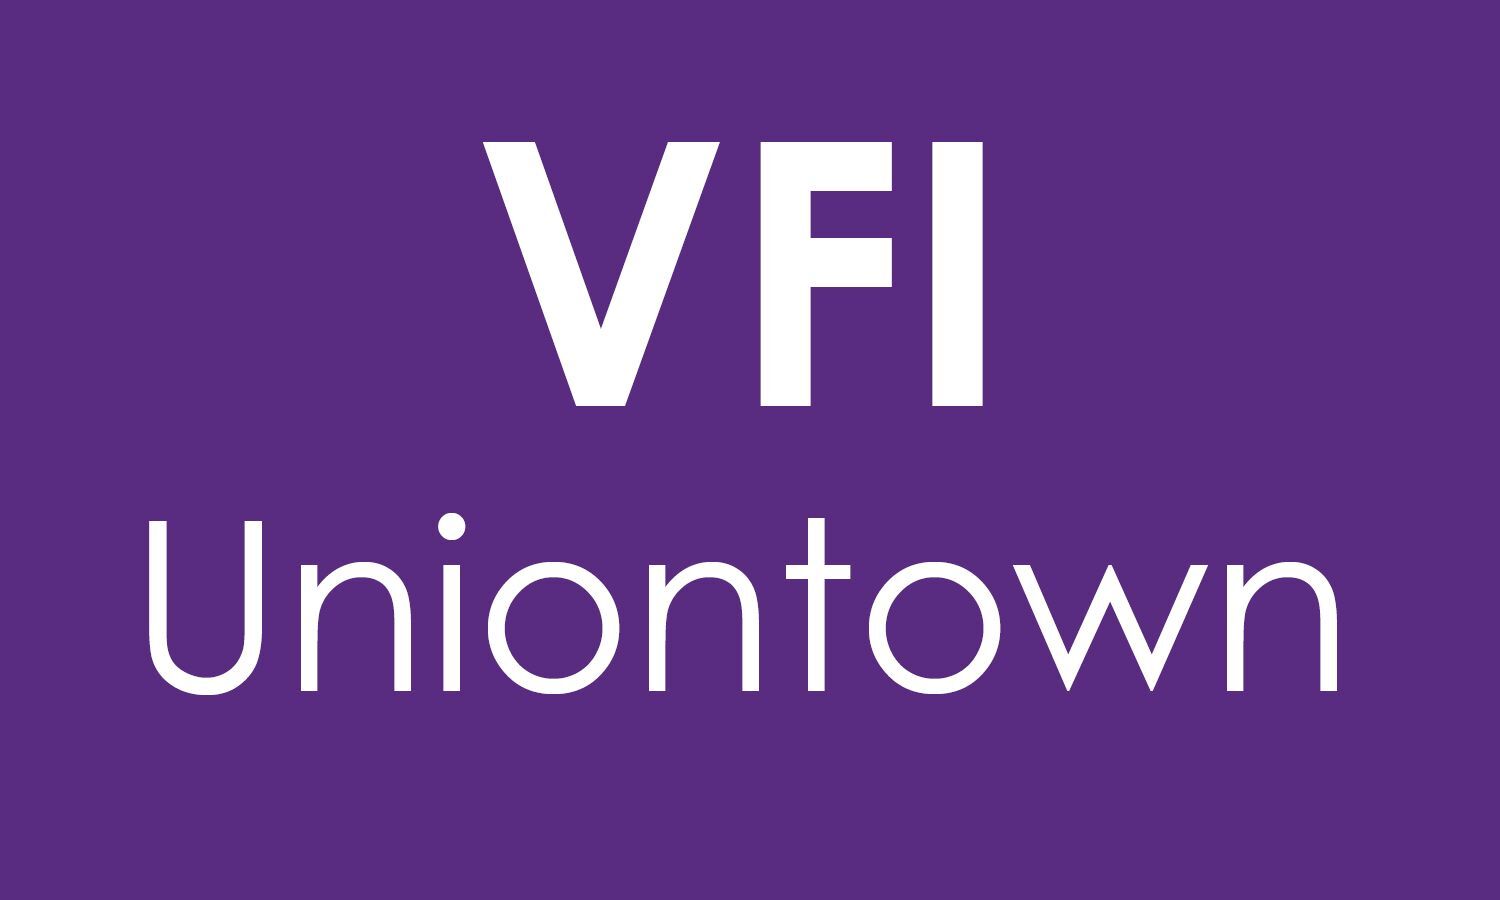 VFI Uniontown